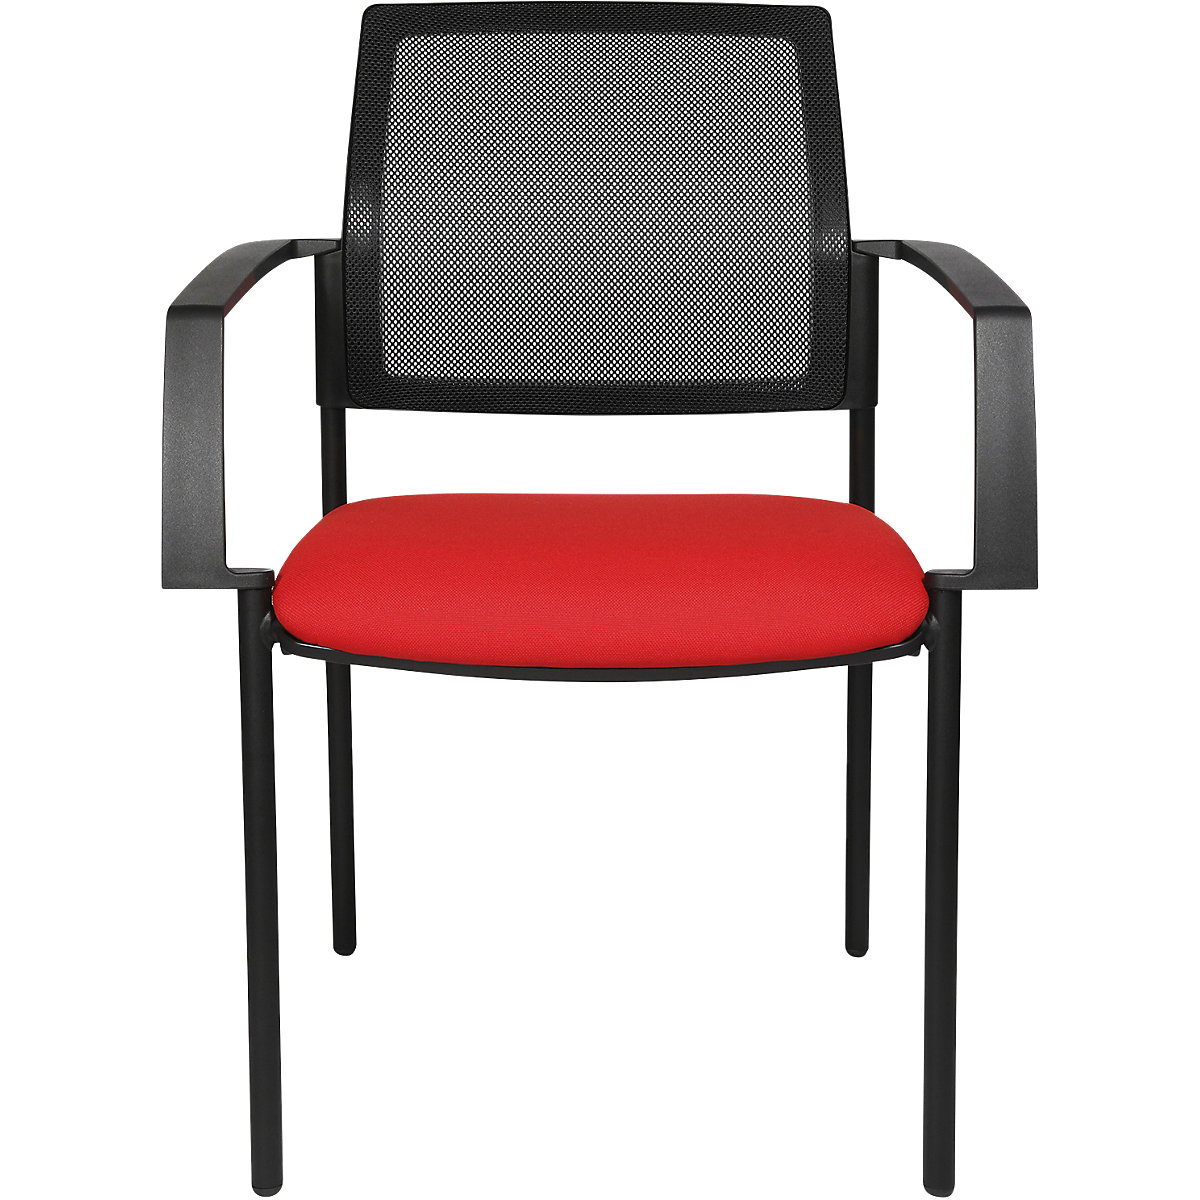 Silla apilable de malla – Topstar, 4 patas, UE 2 unid., asiento rojo, armazón negro-8